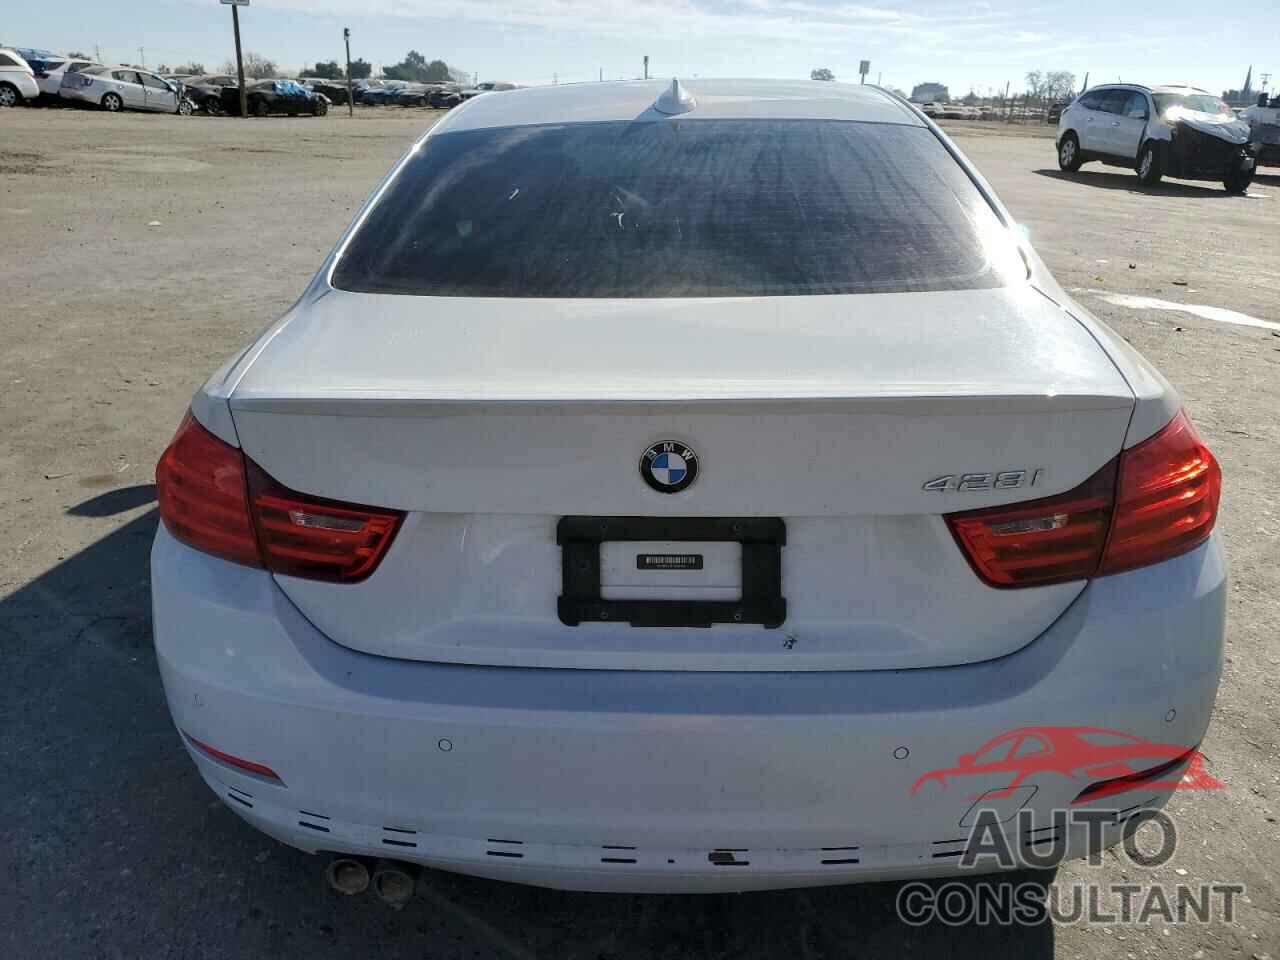 BMW 4 SERIES 2015 - WBA3N7C51FK225102